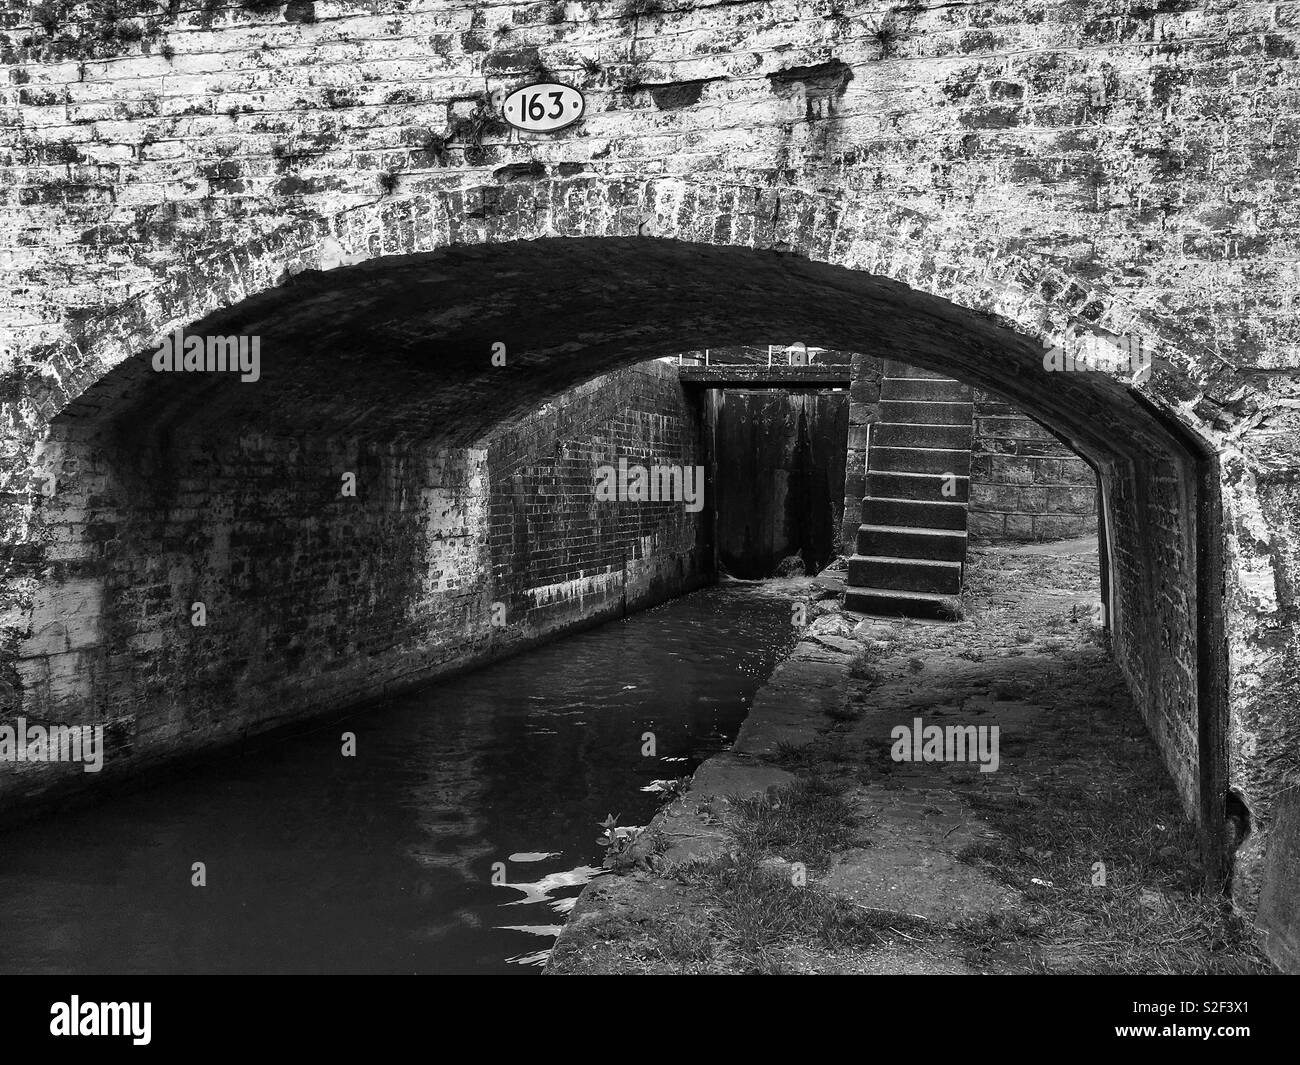 Arch bridge with lock in Cheshire Uk Stock Photo - Alamy